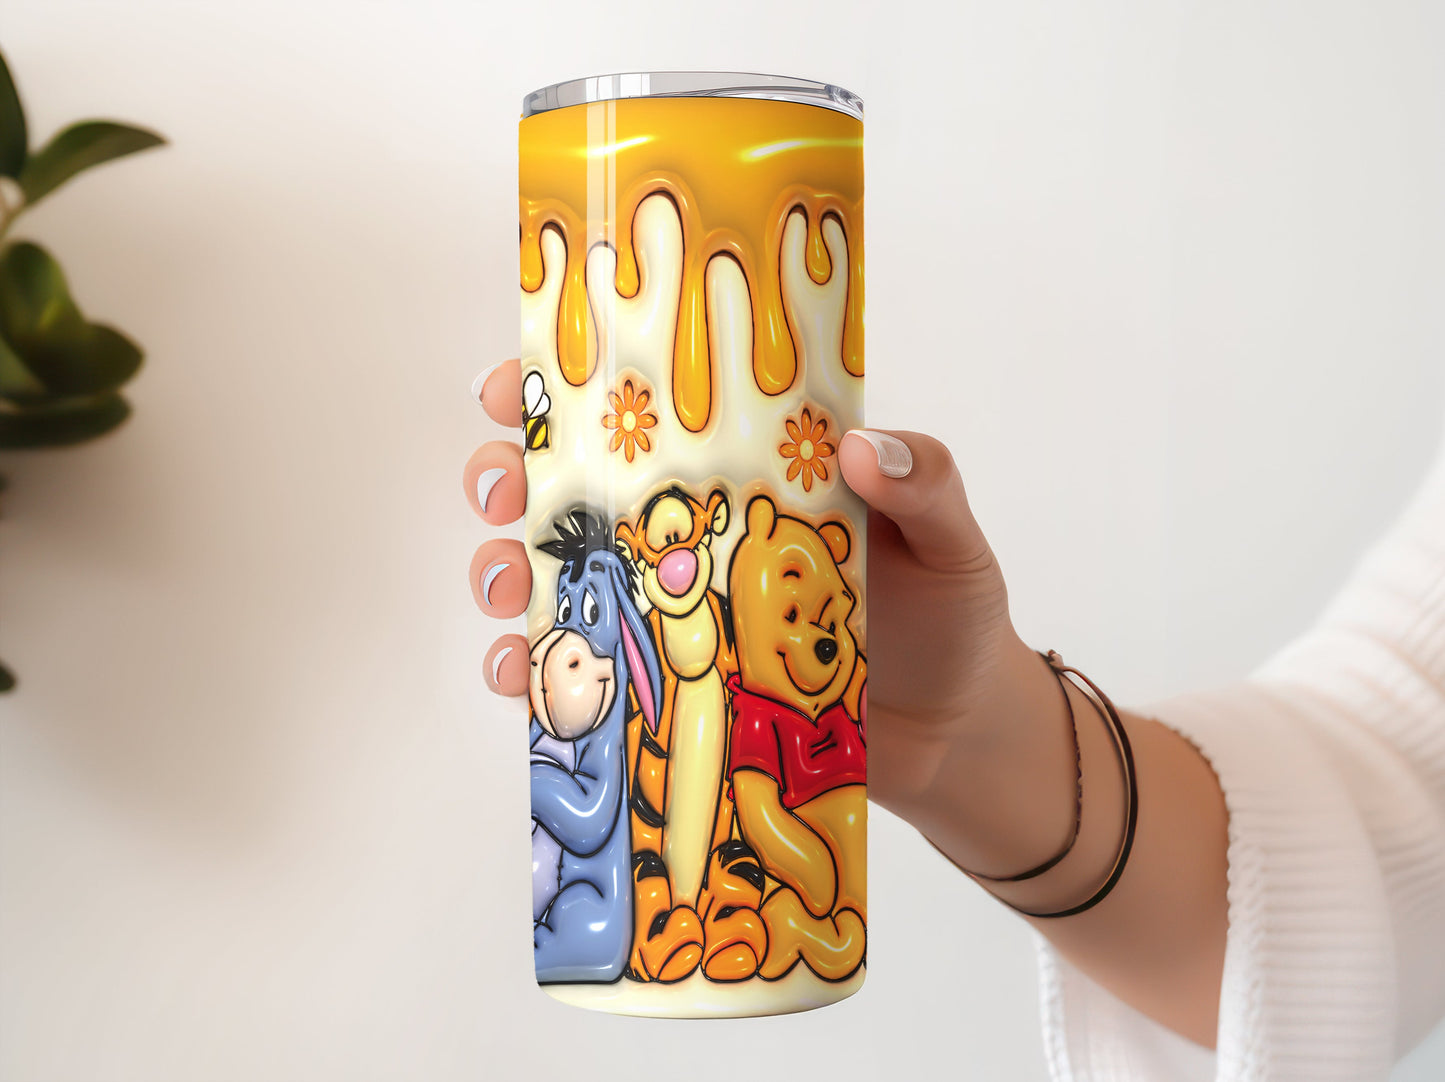 20 oz Cartoon 3D Bear Inflated Tumbler Png Tumbler Wraps, Inflated 20oz Floral Skinny Sublimation Digital Downloads 3D Puffy Bear Design - VartDigitals